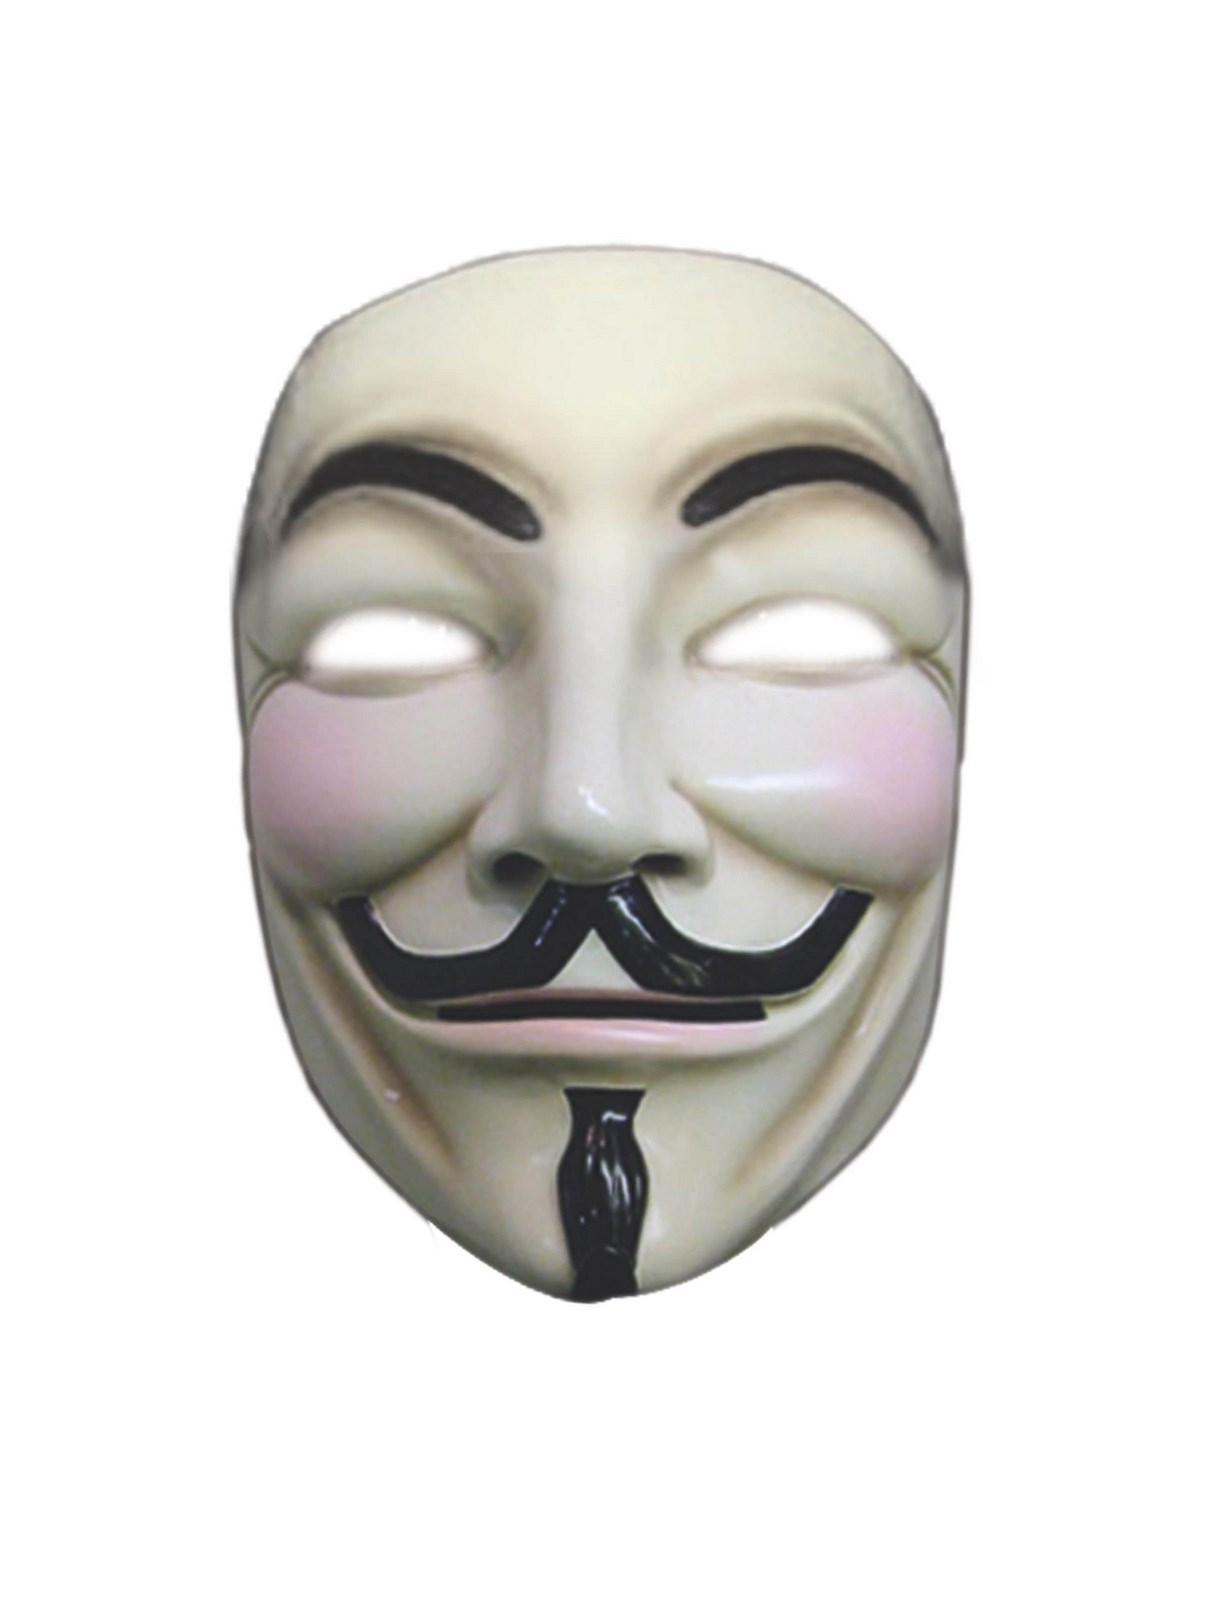 V for Vendetta Collectors Edition Mask